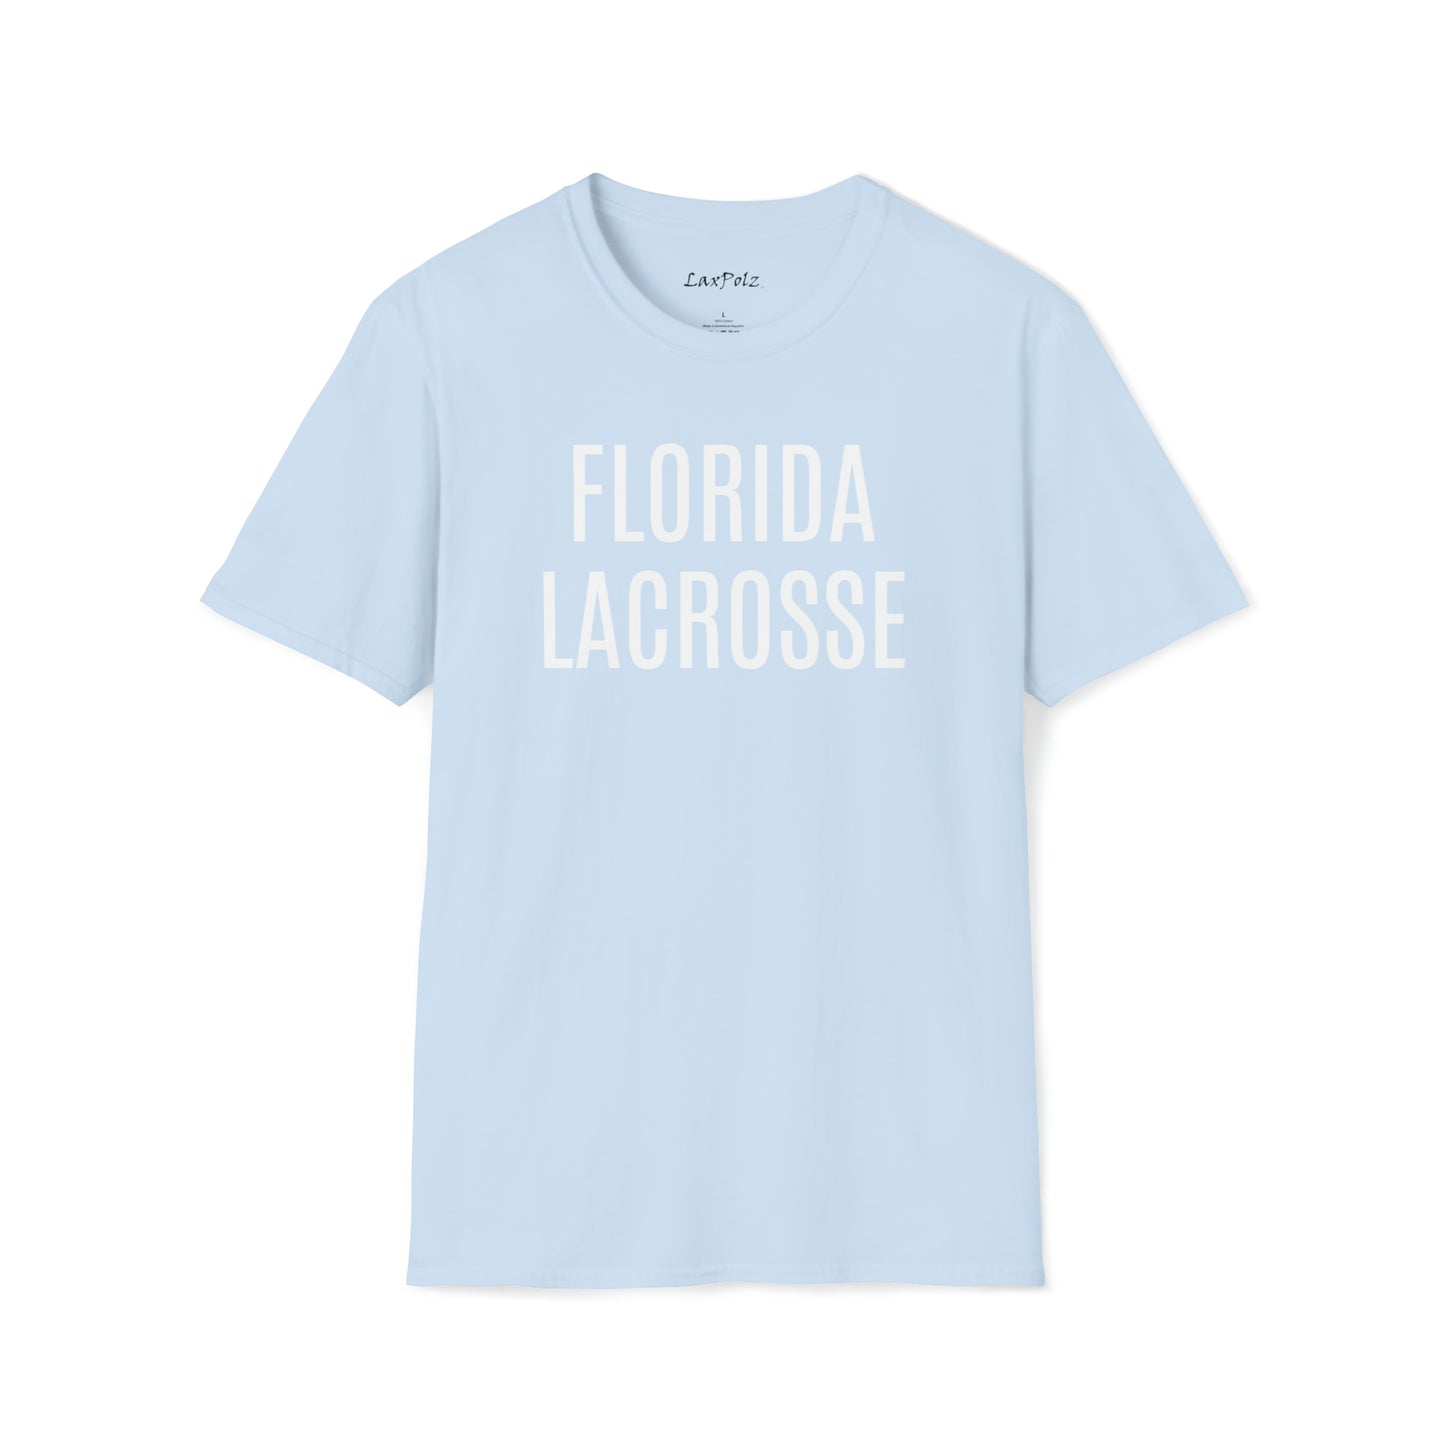 Florida Lacrosse Softstyle Tee